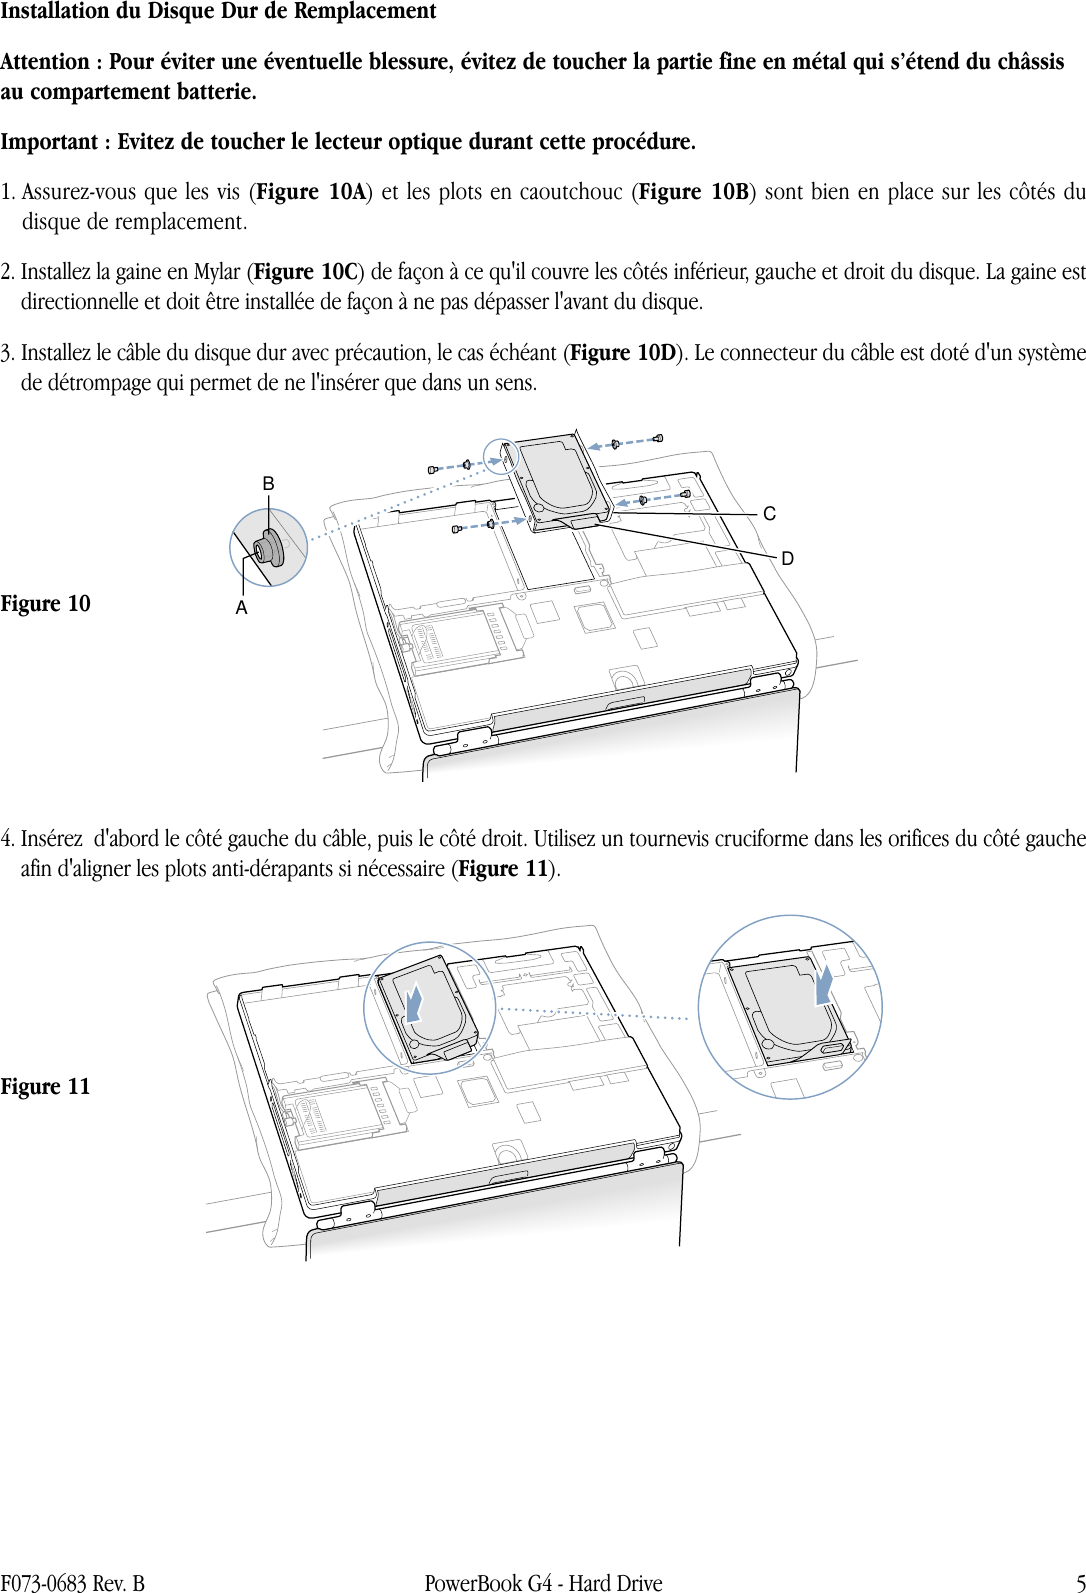 Page 5 of 8 - Apple PowerBook G4 (DVI) Hard Drive User Manual Power Book G4 (DVI, 1GHz/867MHz) - Disque Dur Instructions De Remplacement Pbg4dvi-hd-cip